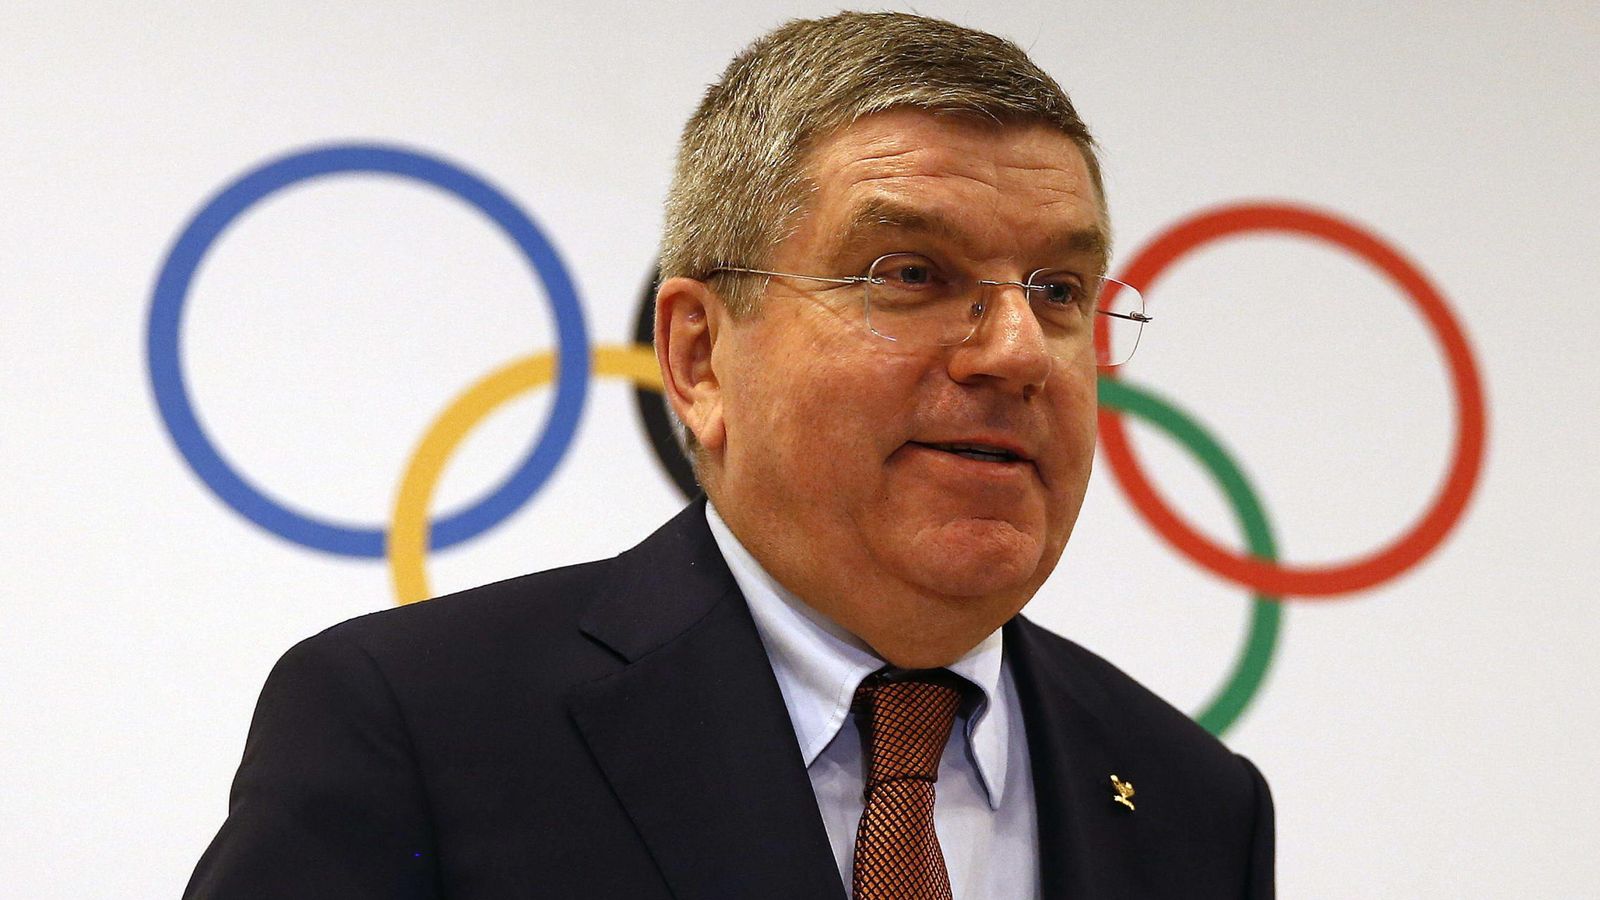 Foto: Thomas Bach, presidente del Comité Olímpico Internacional (COI).